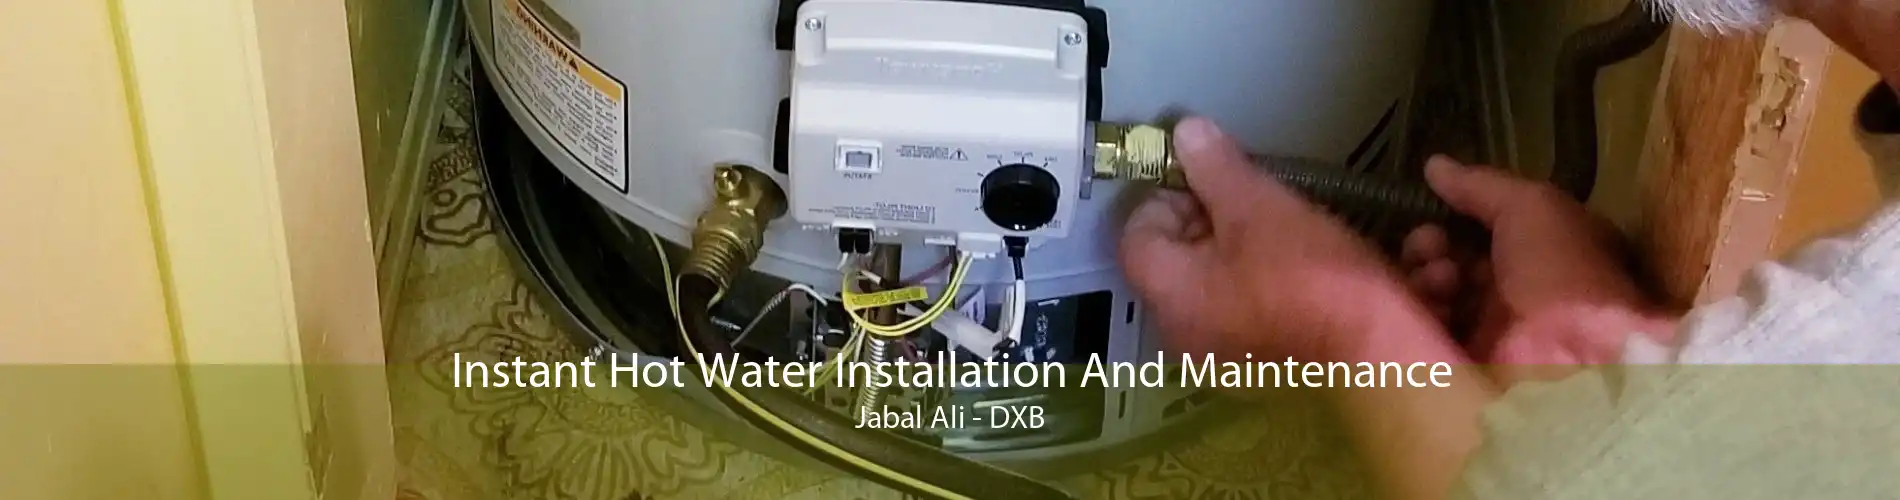 Instant Hot Water Installation And Maintenance Jabal Ali - DXB